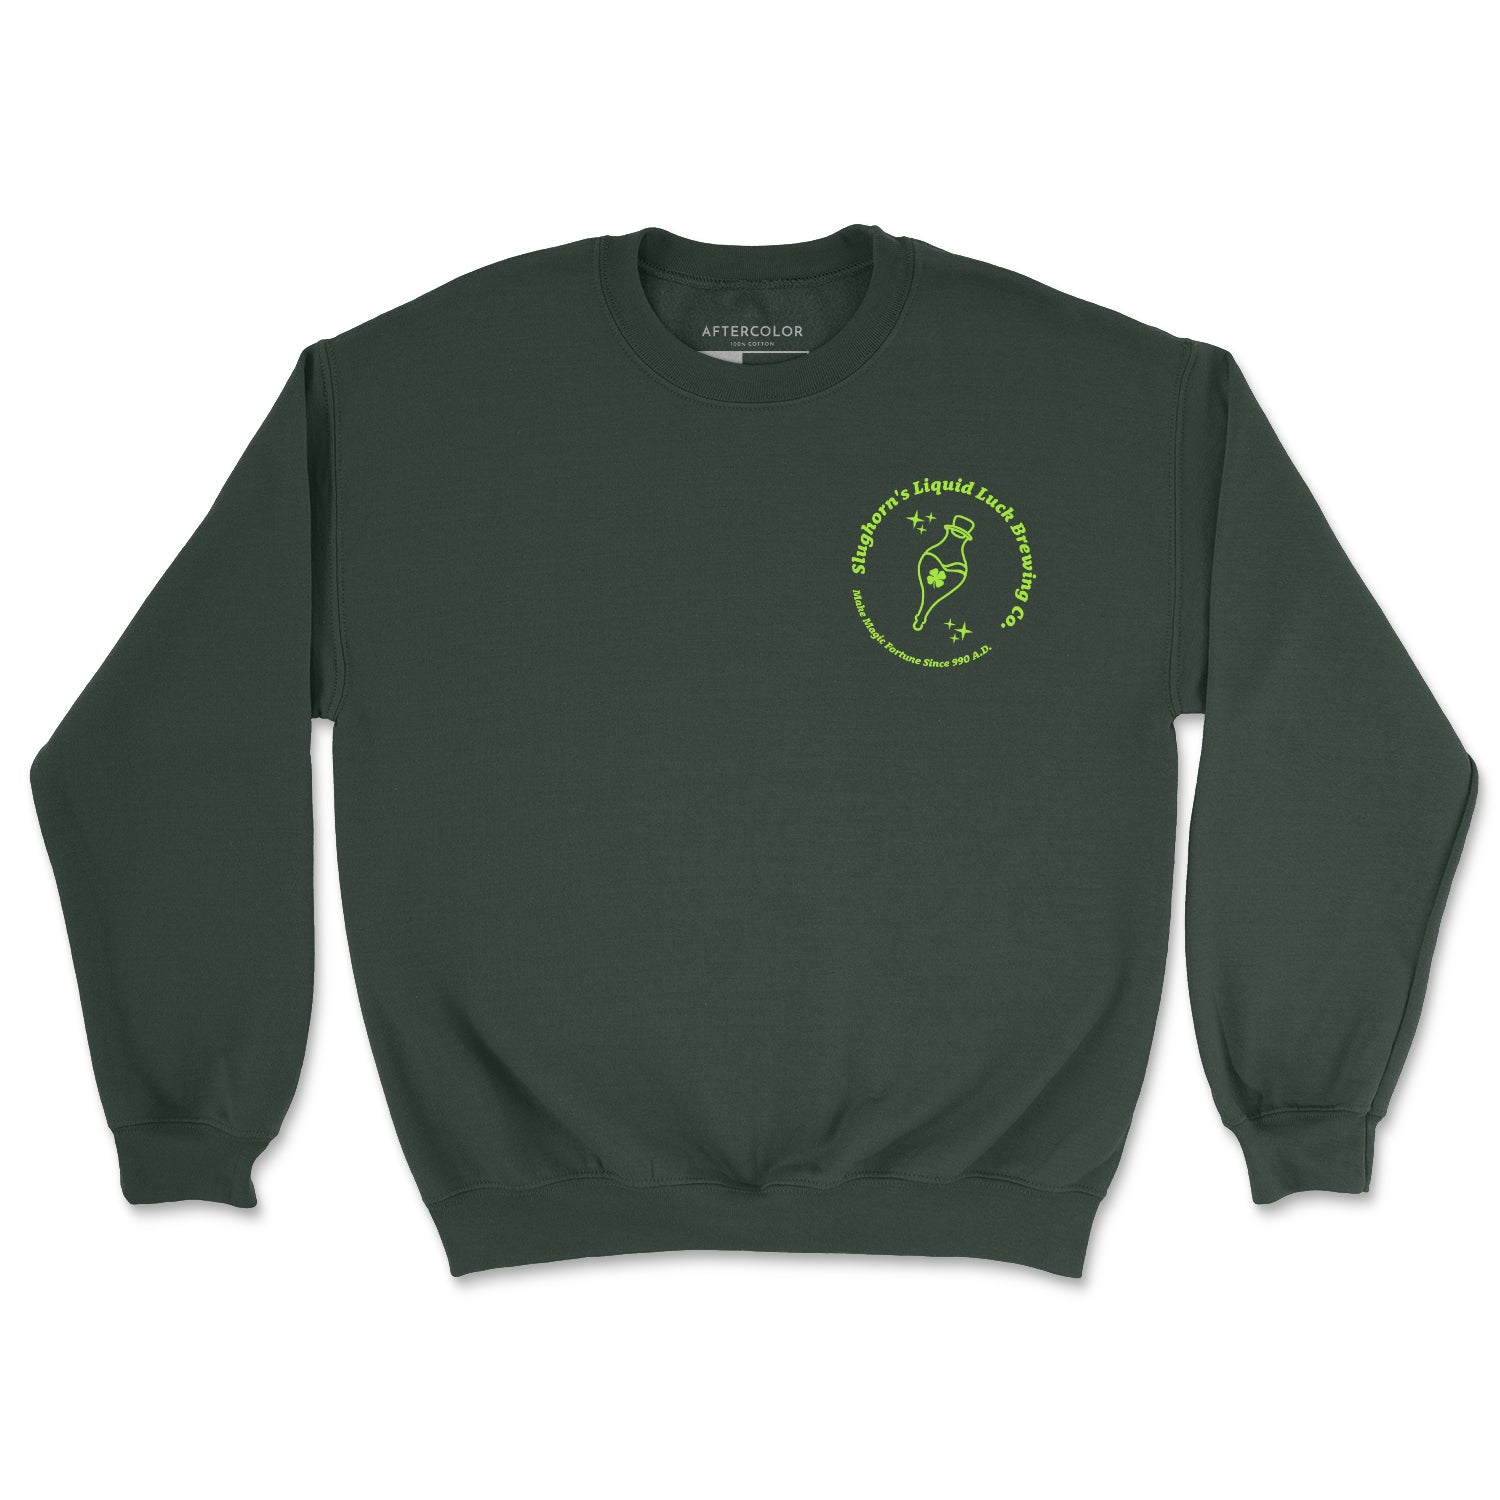 Make Your Own Luck Crewneck Sweatshirt